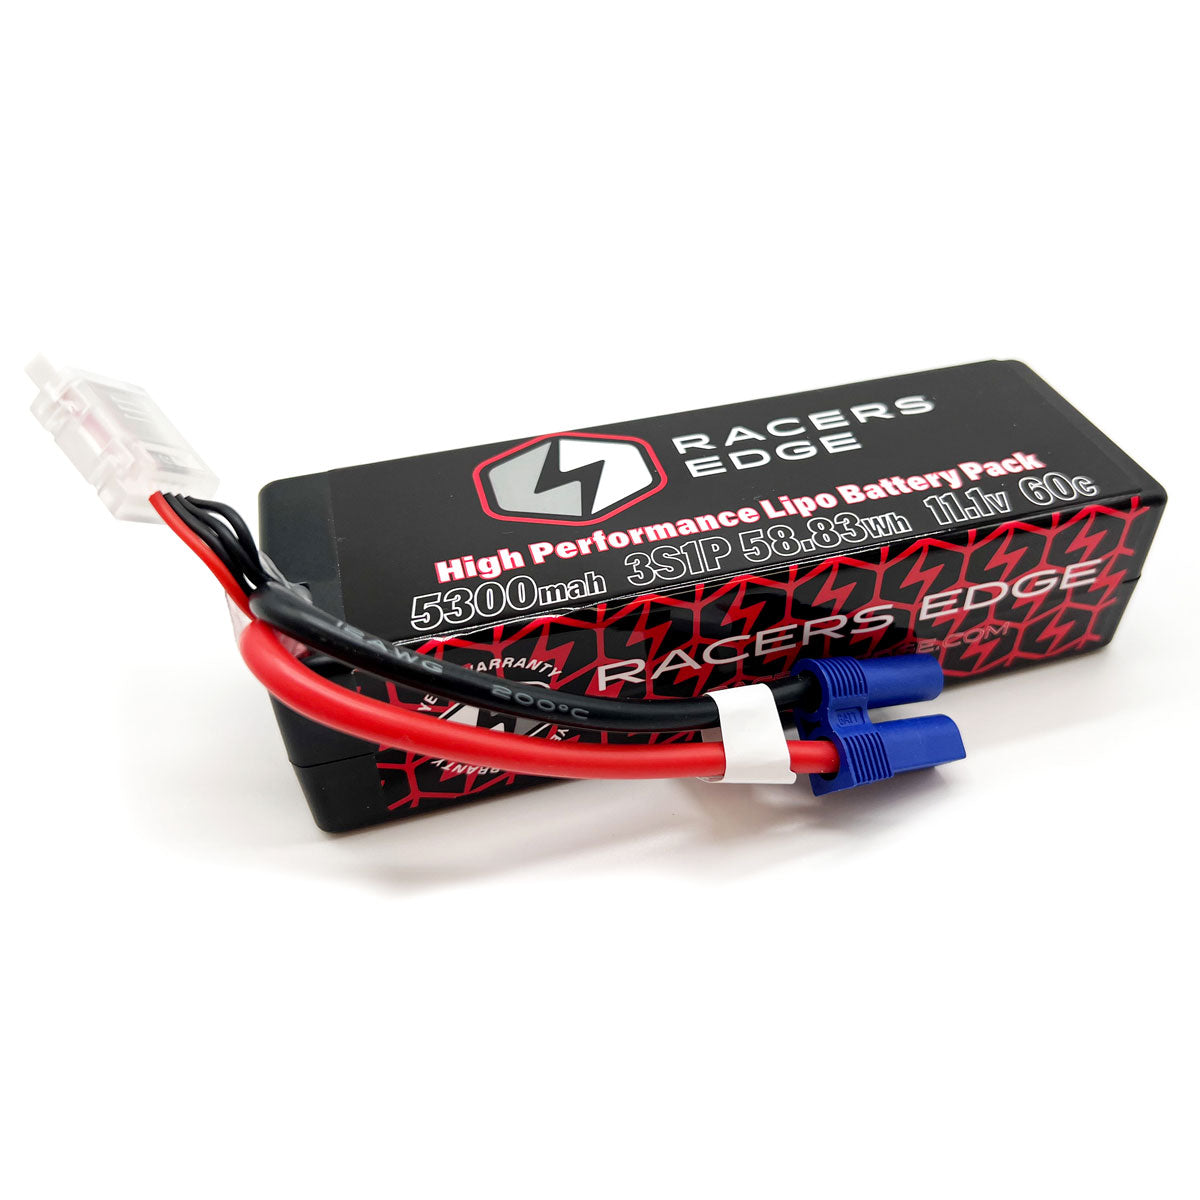 Racers Edge 5300mAh 3S 11.1V 60C Hard Case Lipo Battery w/EC5 Connector LP53003S60EC5